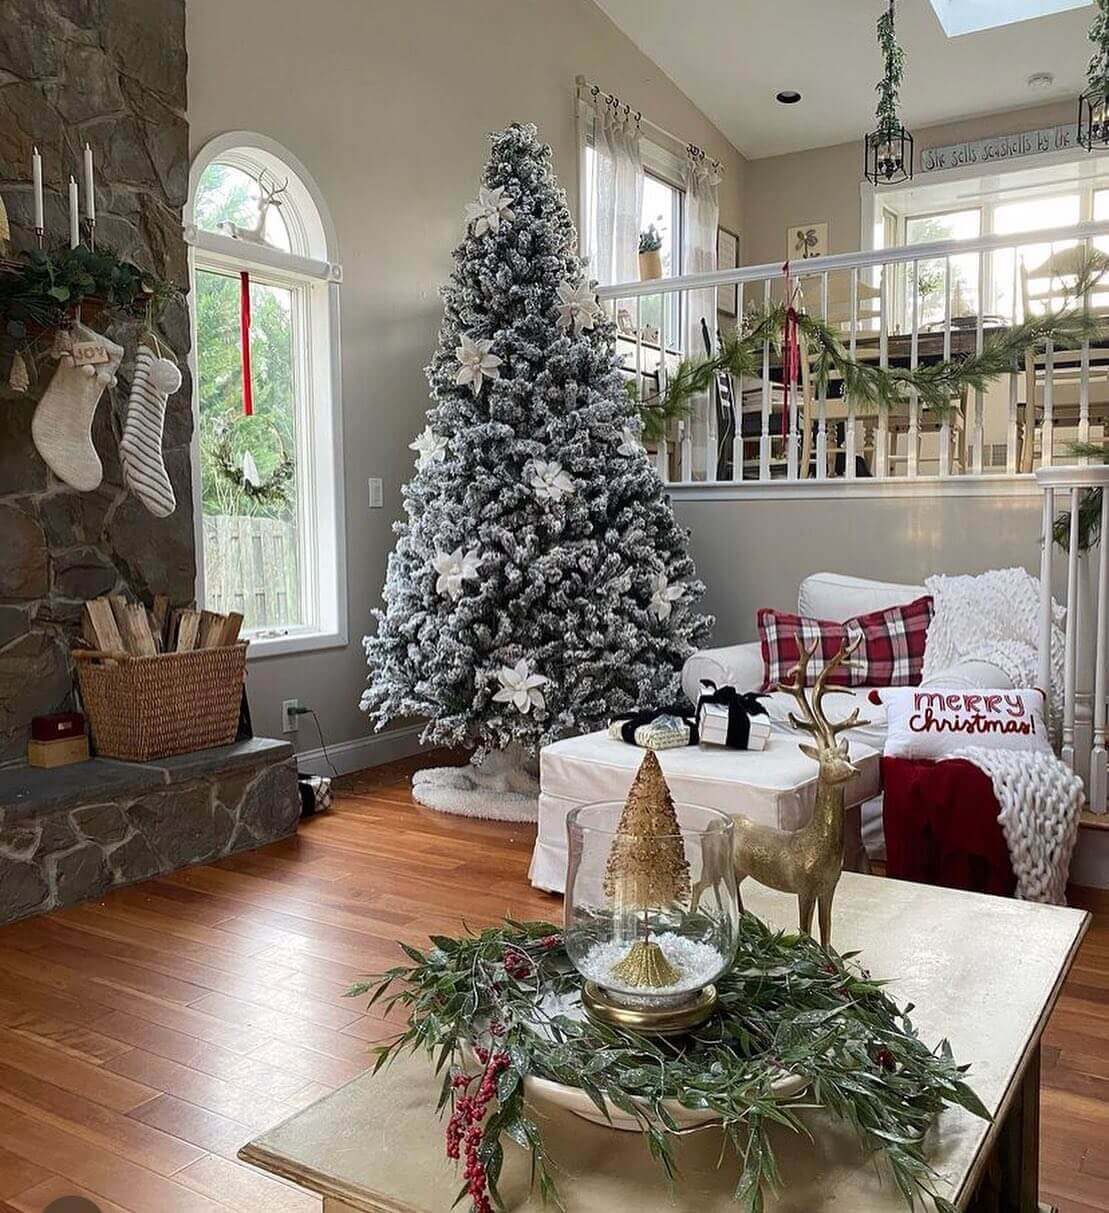 King of Christmas 7' Prince Flock® Artificial Christmas Tree with 400 Warm White LED Lights